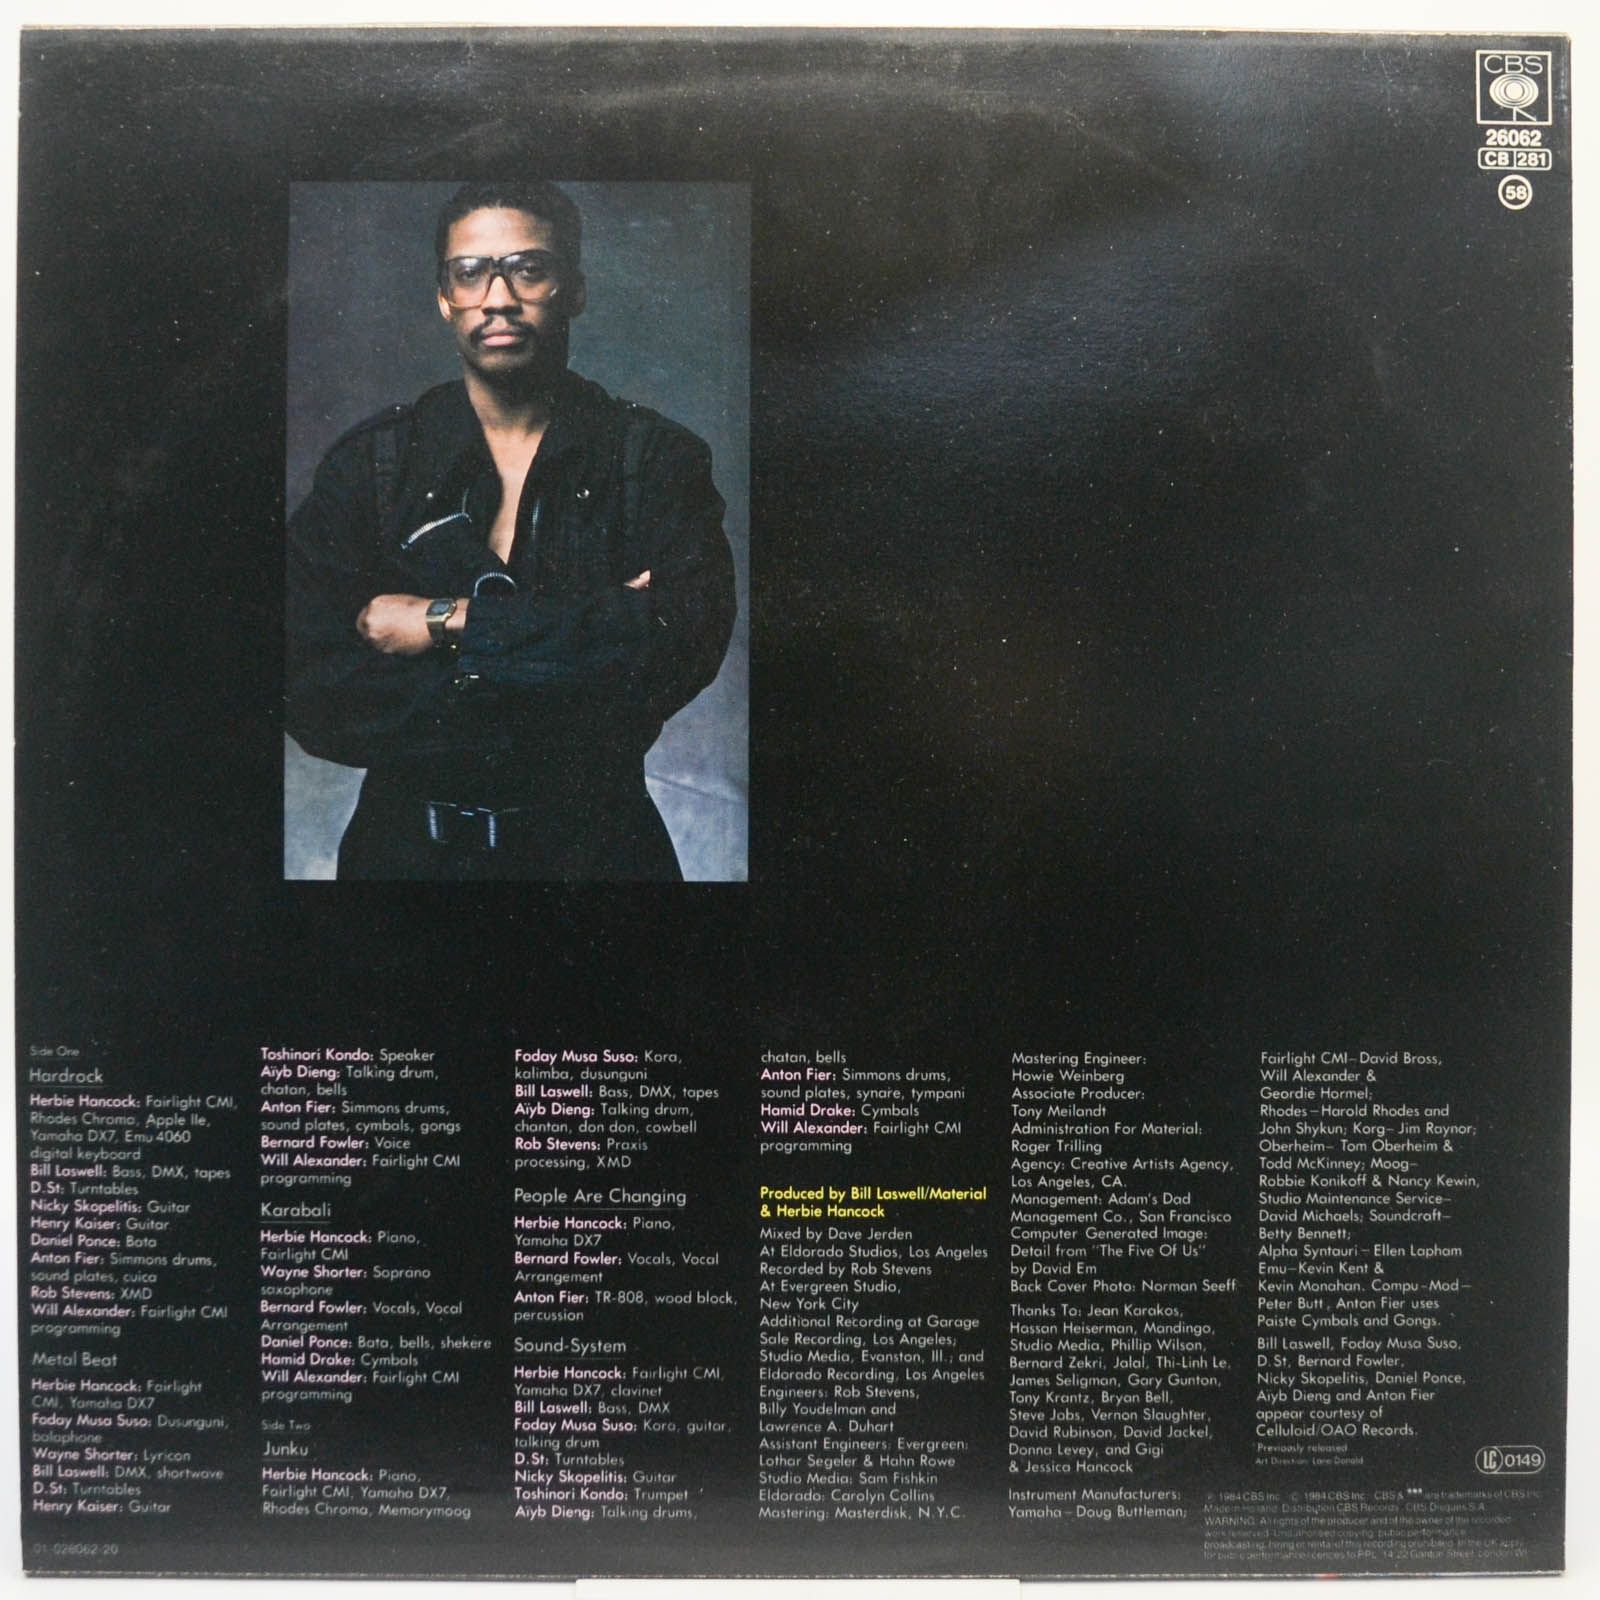 Herbie Hancock — Sound-System, 1984